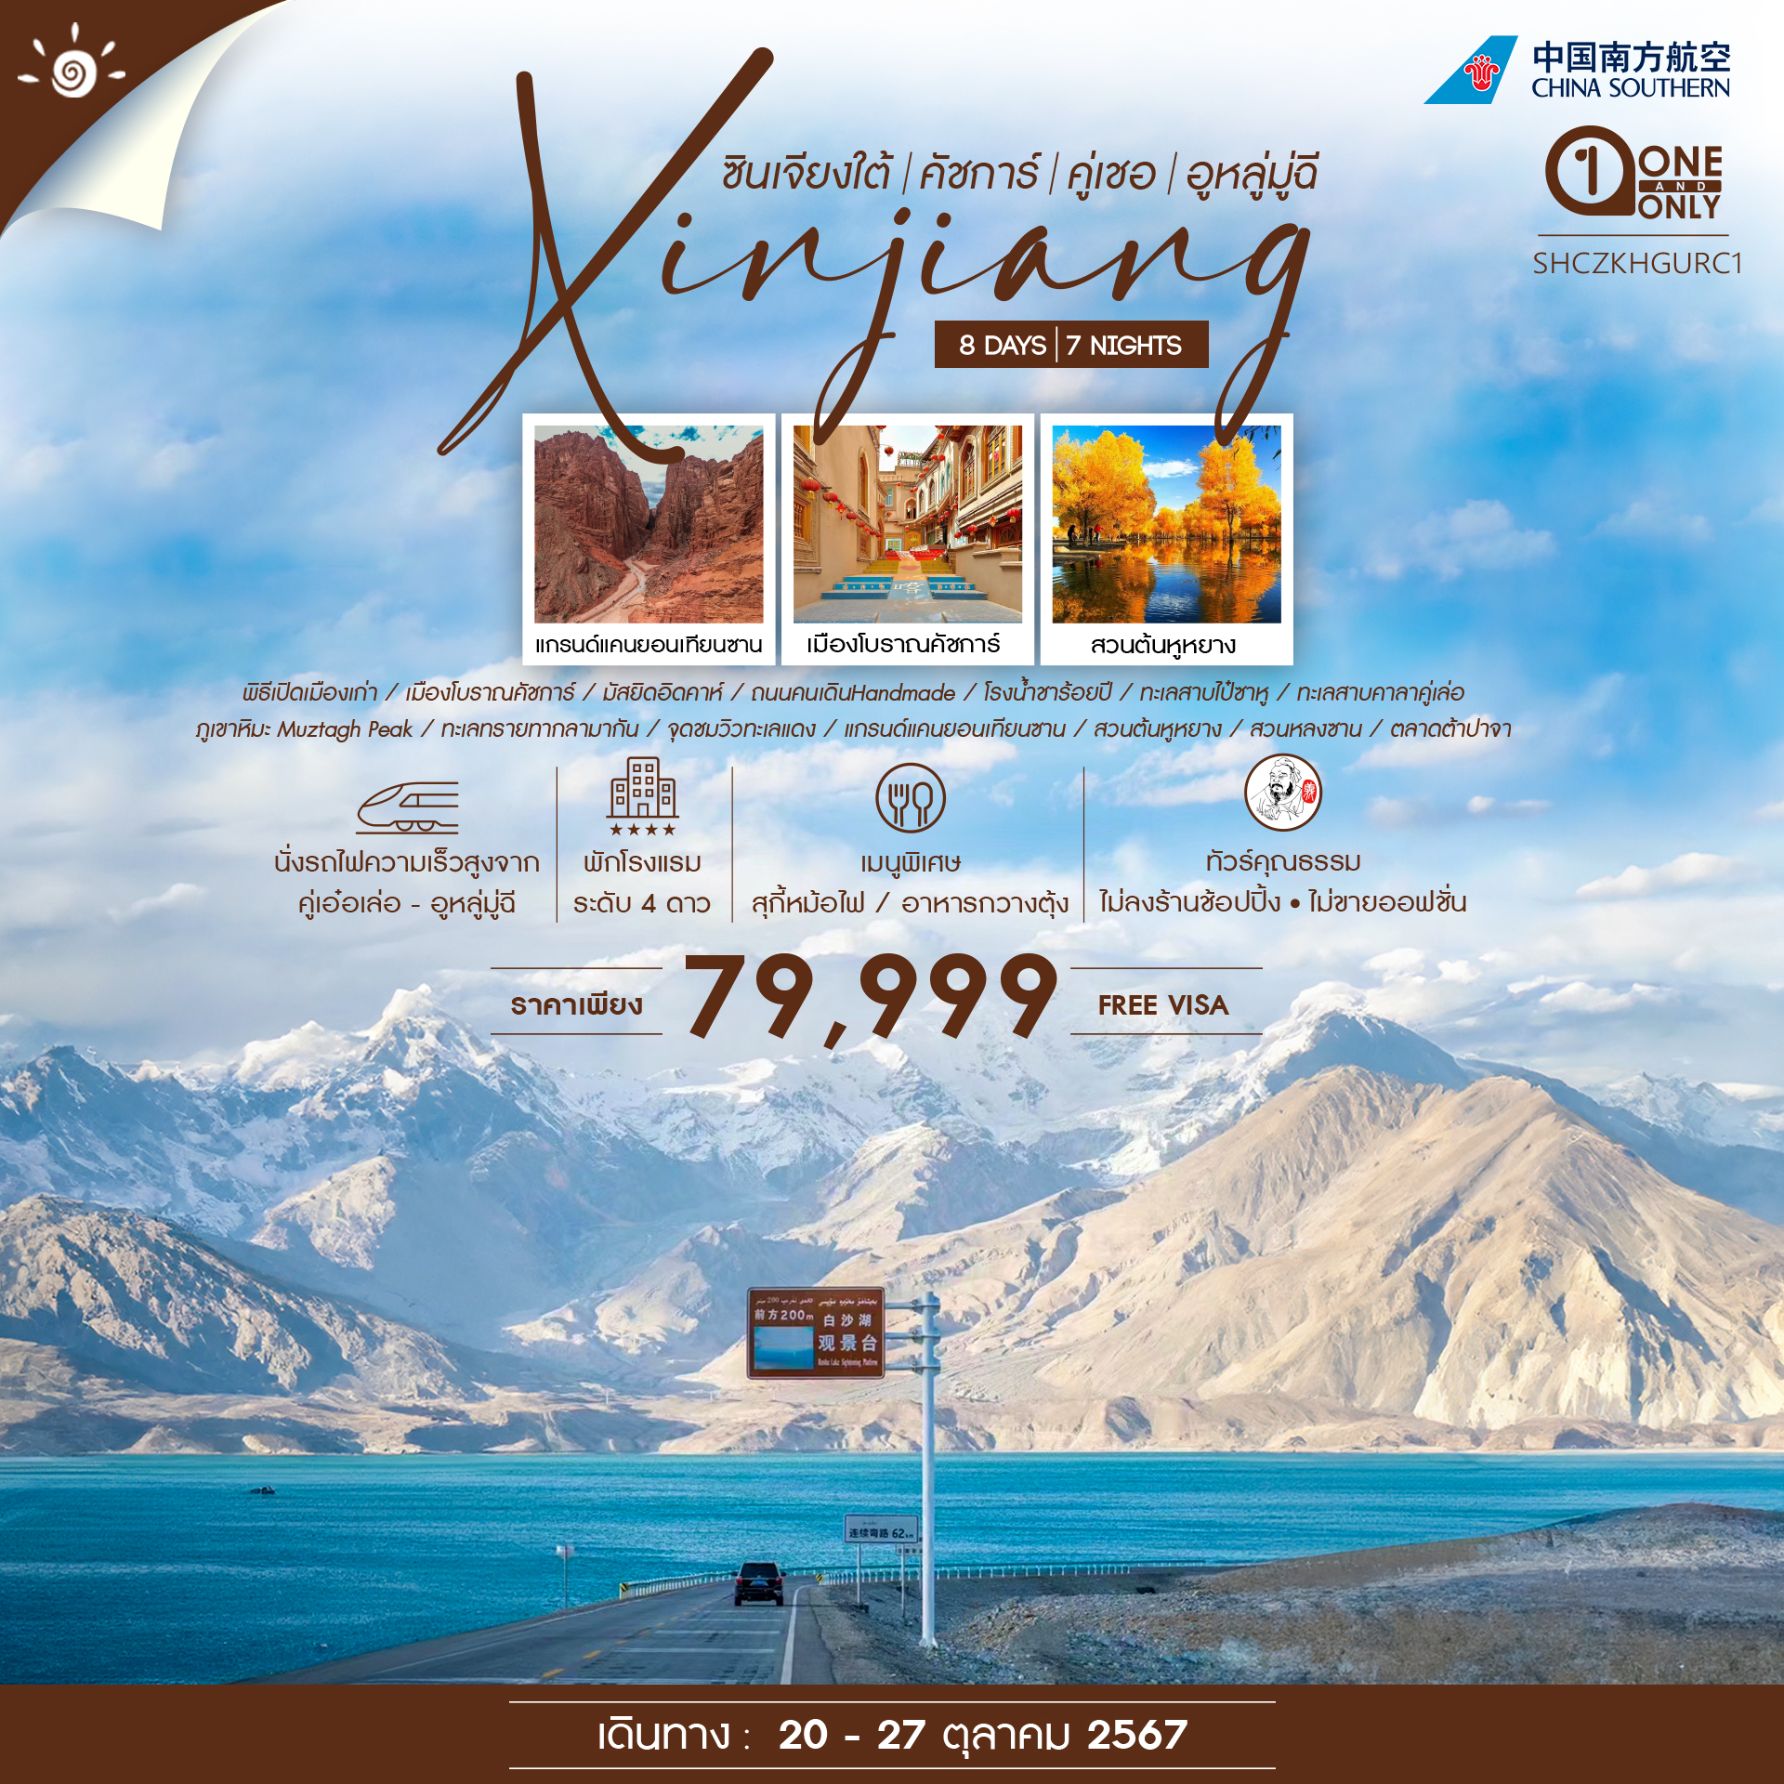 Xinjiang ซินเจียงใต้ คัชการ์ คู่เชอ อูหลูมู่ฉี 8 วัน 7 คืน เดินทาง 20-27 ต.ค.67 ราคา 79,999.- China Southern Airlines (CZ)